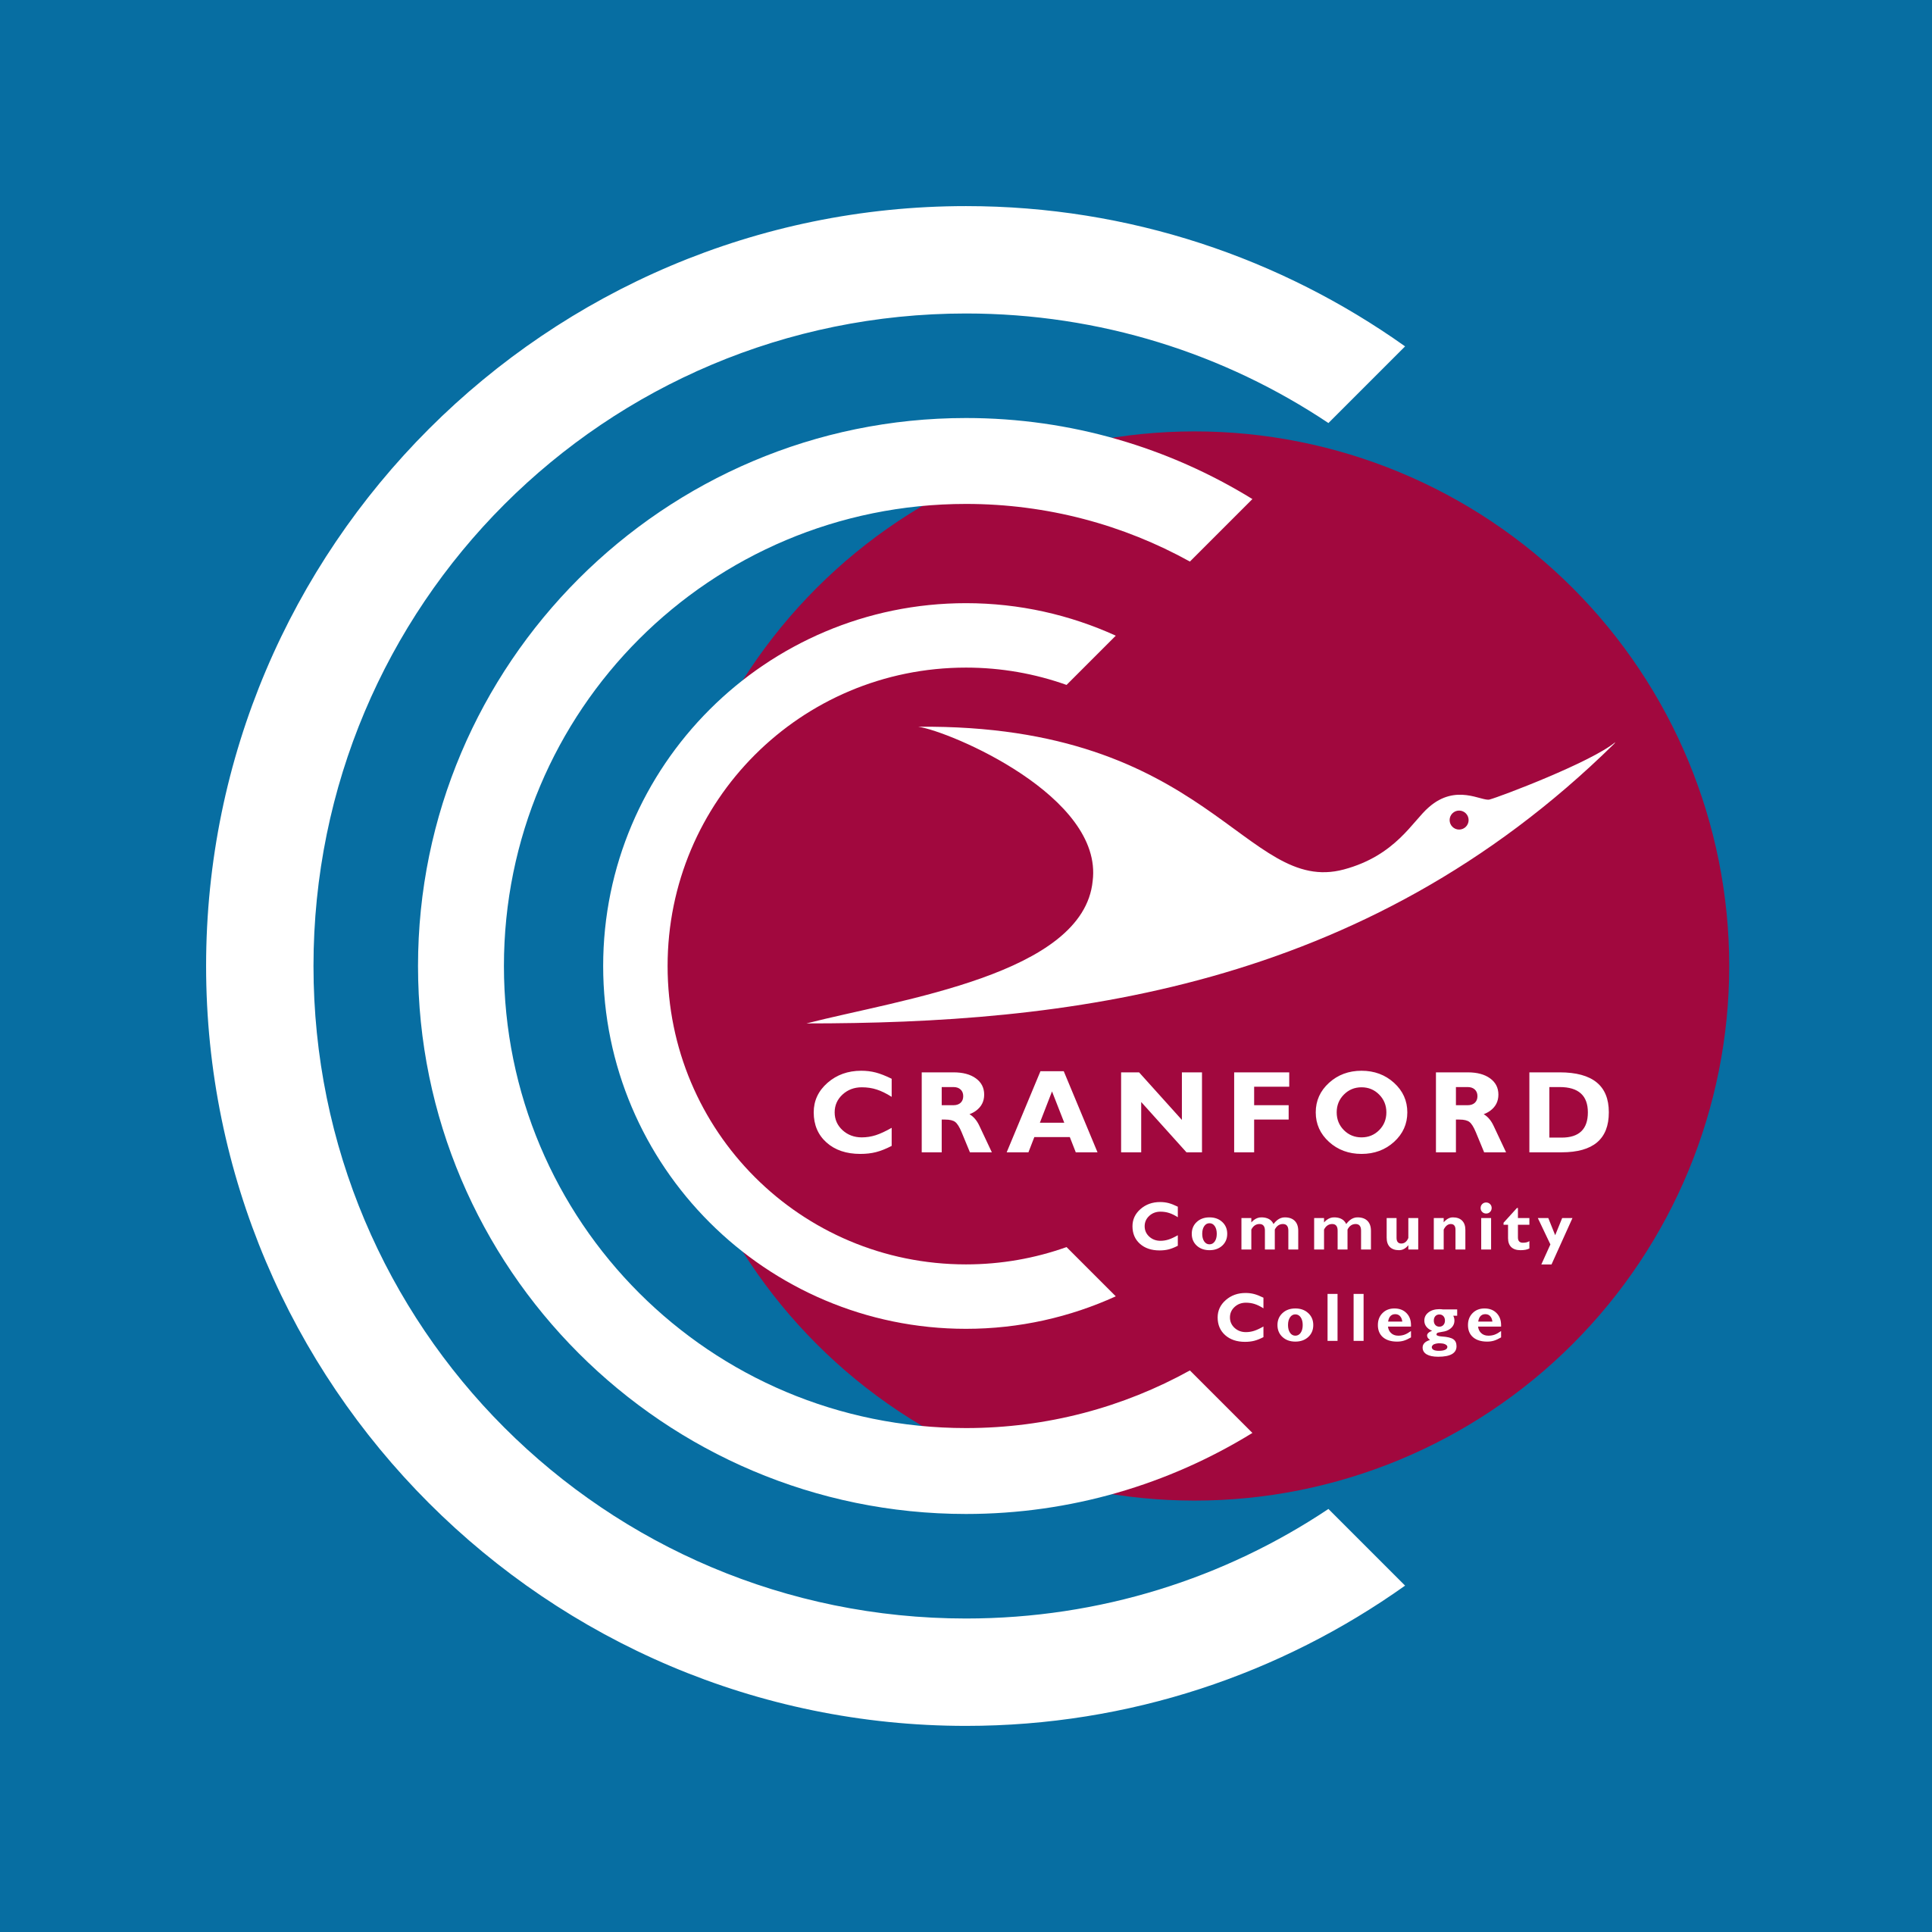 Cranford News – 2022/23 Academic Review